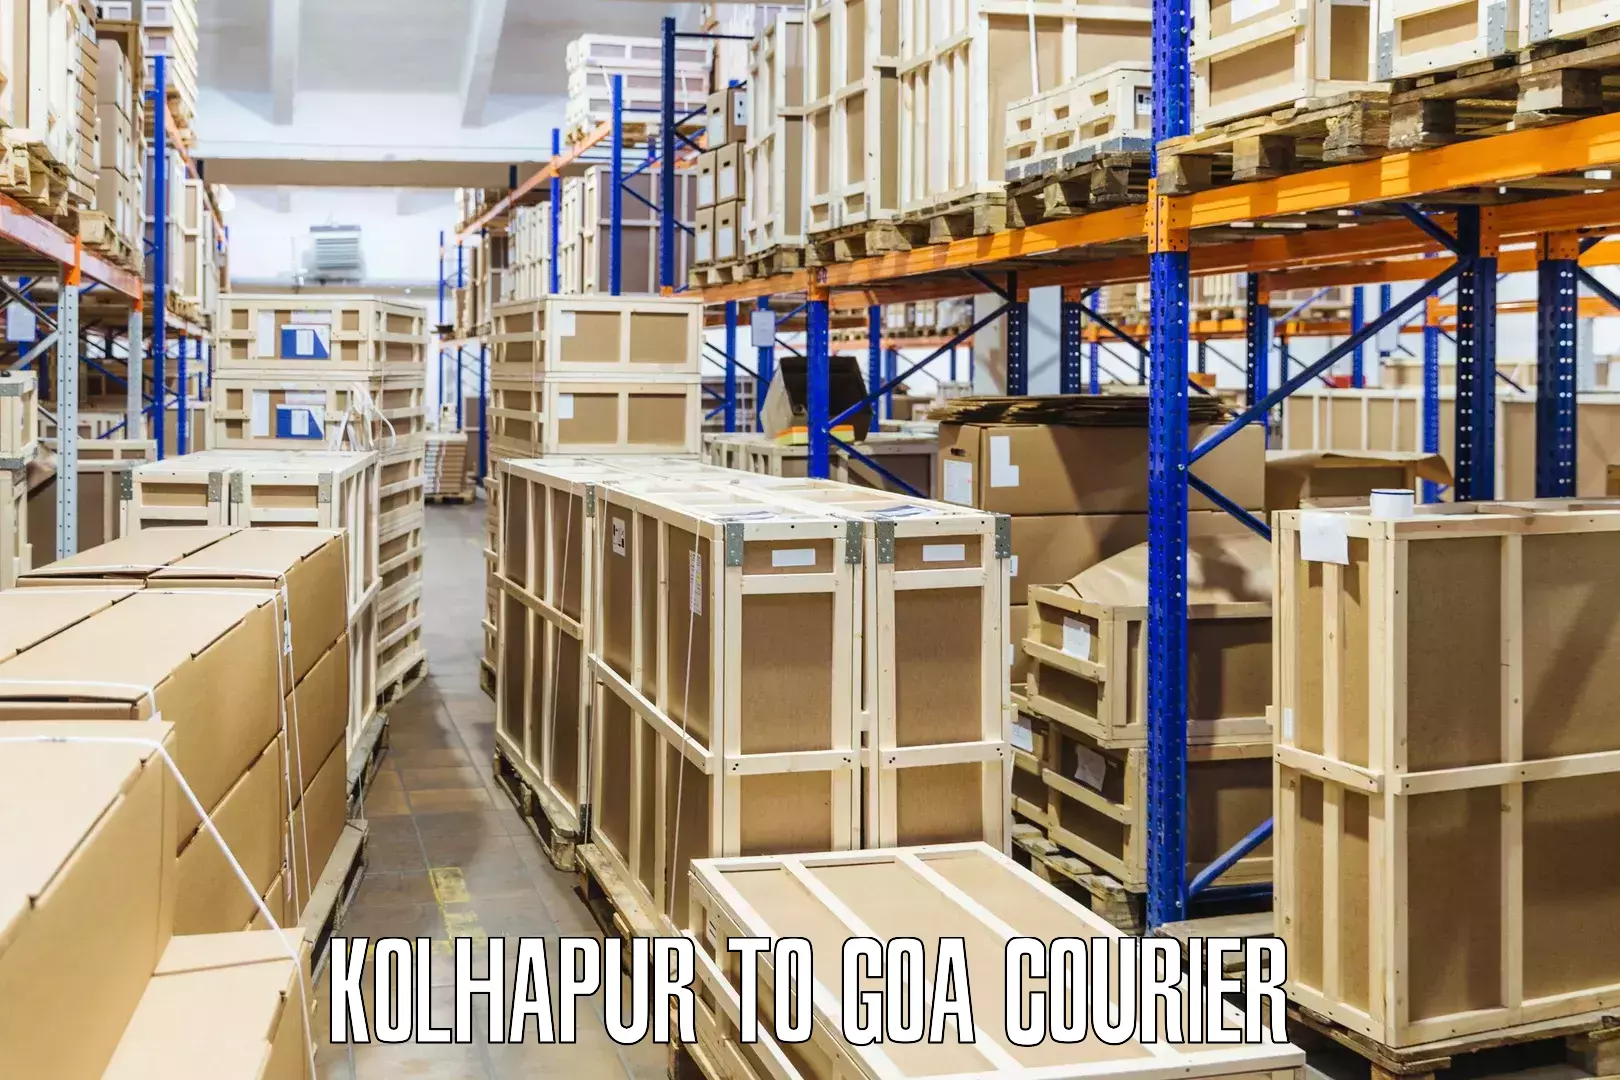 Nationwide shipping capabilities Kolhapur to South Goa